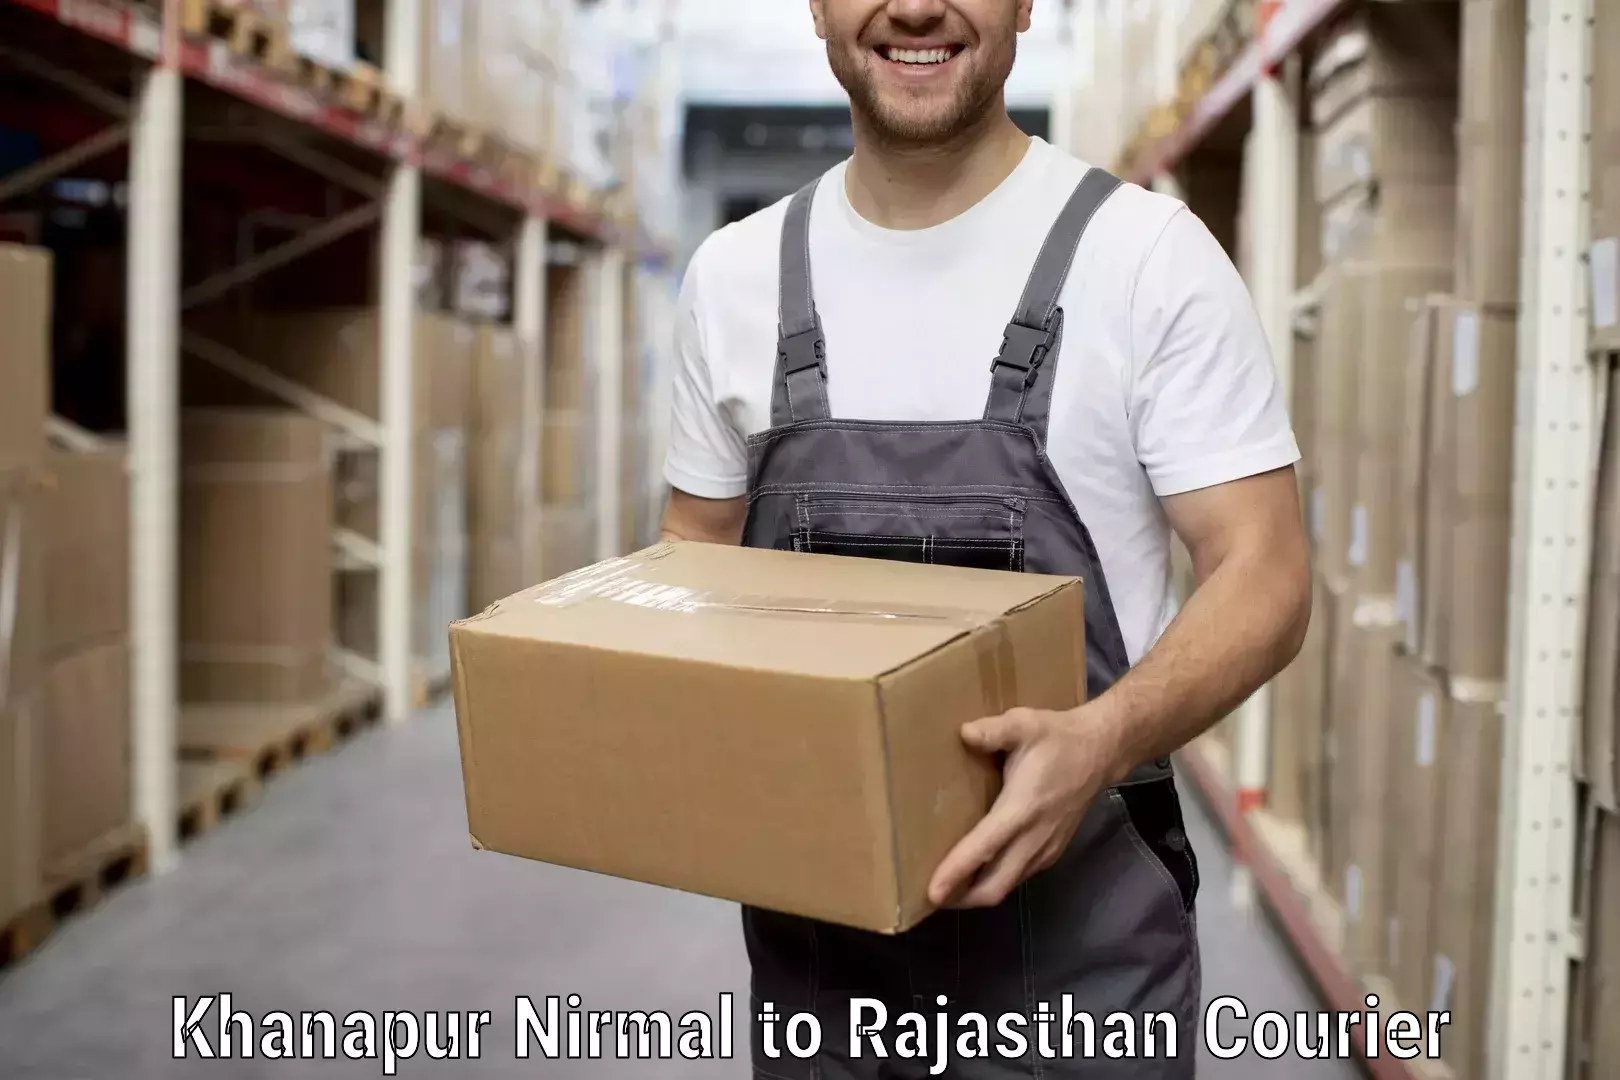 Furniture moving experts Khanapur Nirmal to Didwana